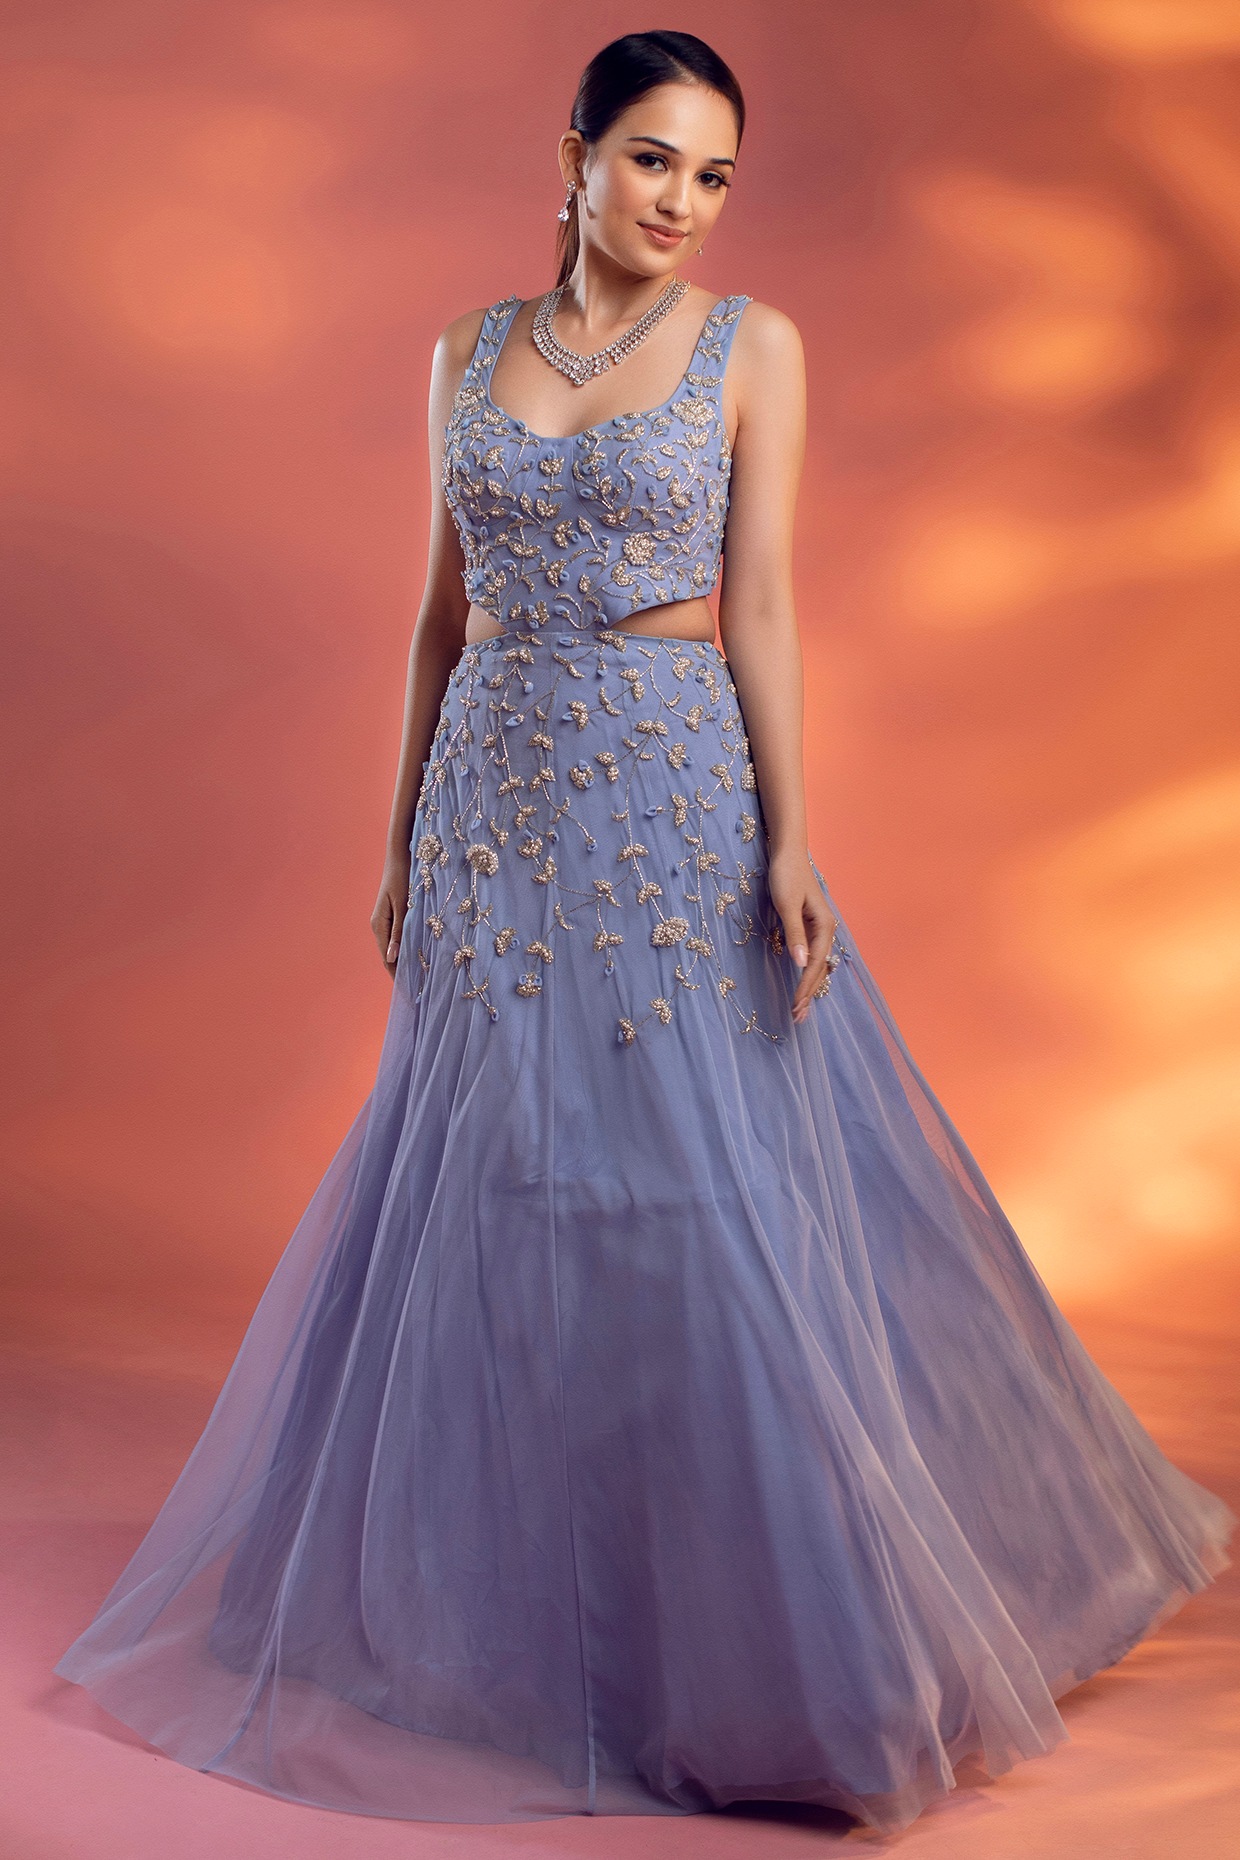 Royal blue dress, Oscar red carpet | Oscars red carpet dresses, Celebrity  dresses, Celebrity inspired dresses